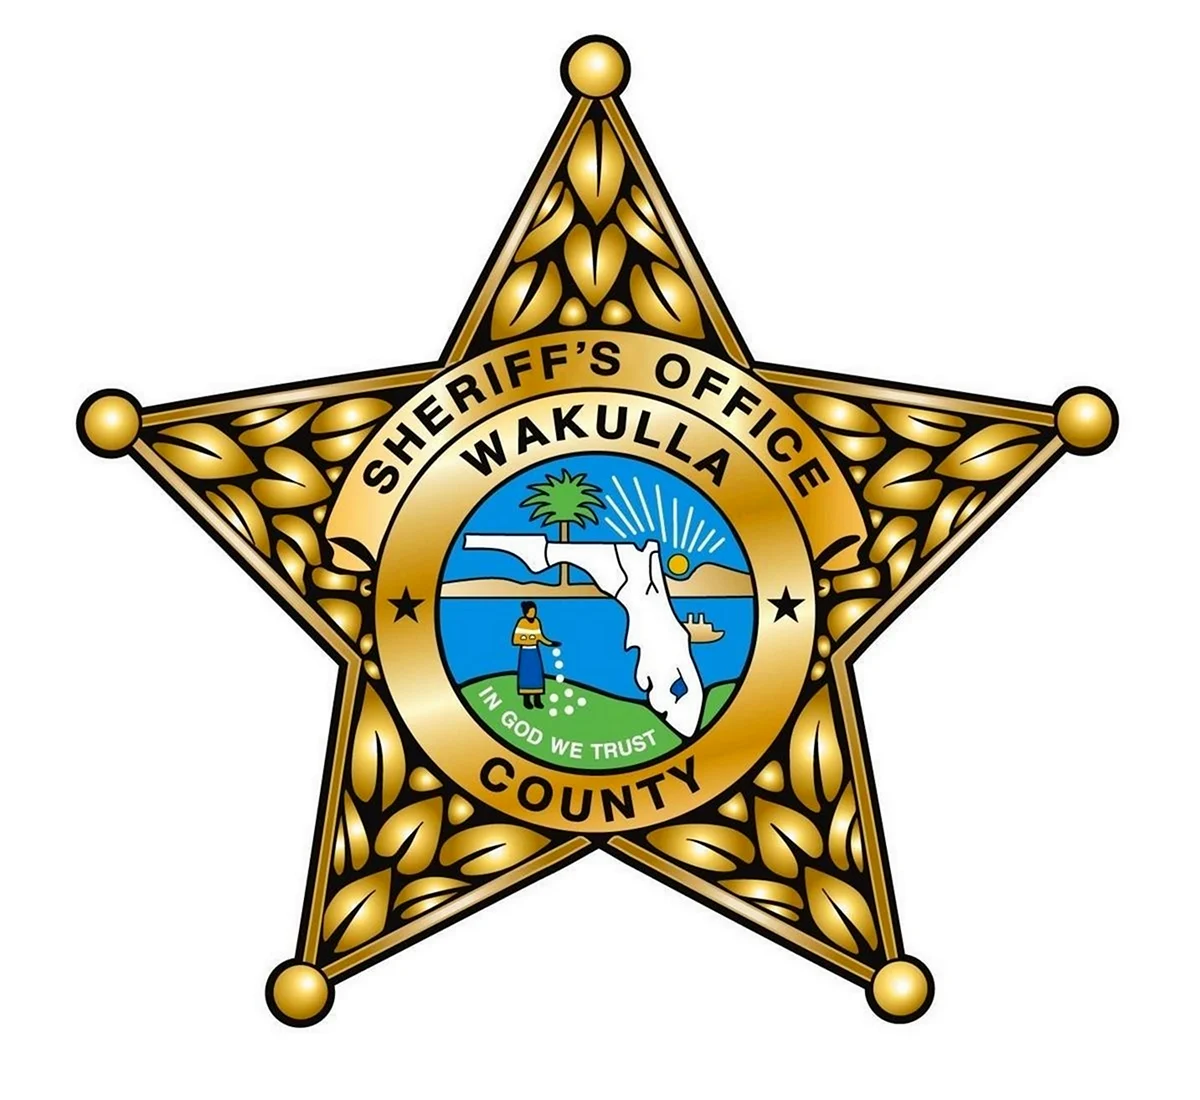 Эмблема шерифа